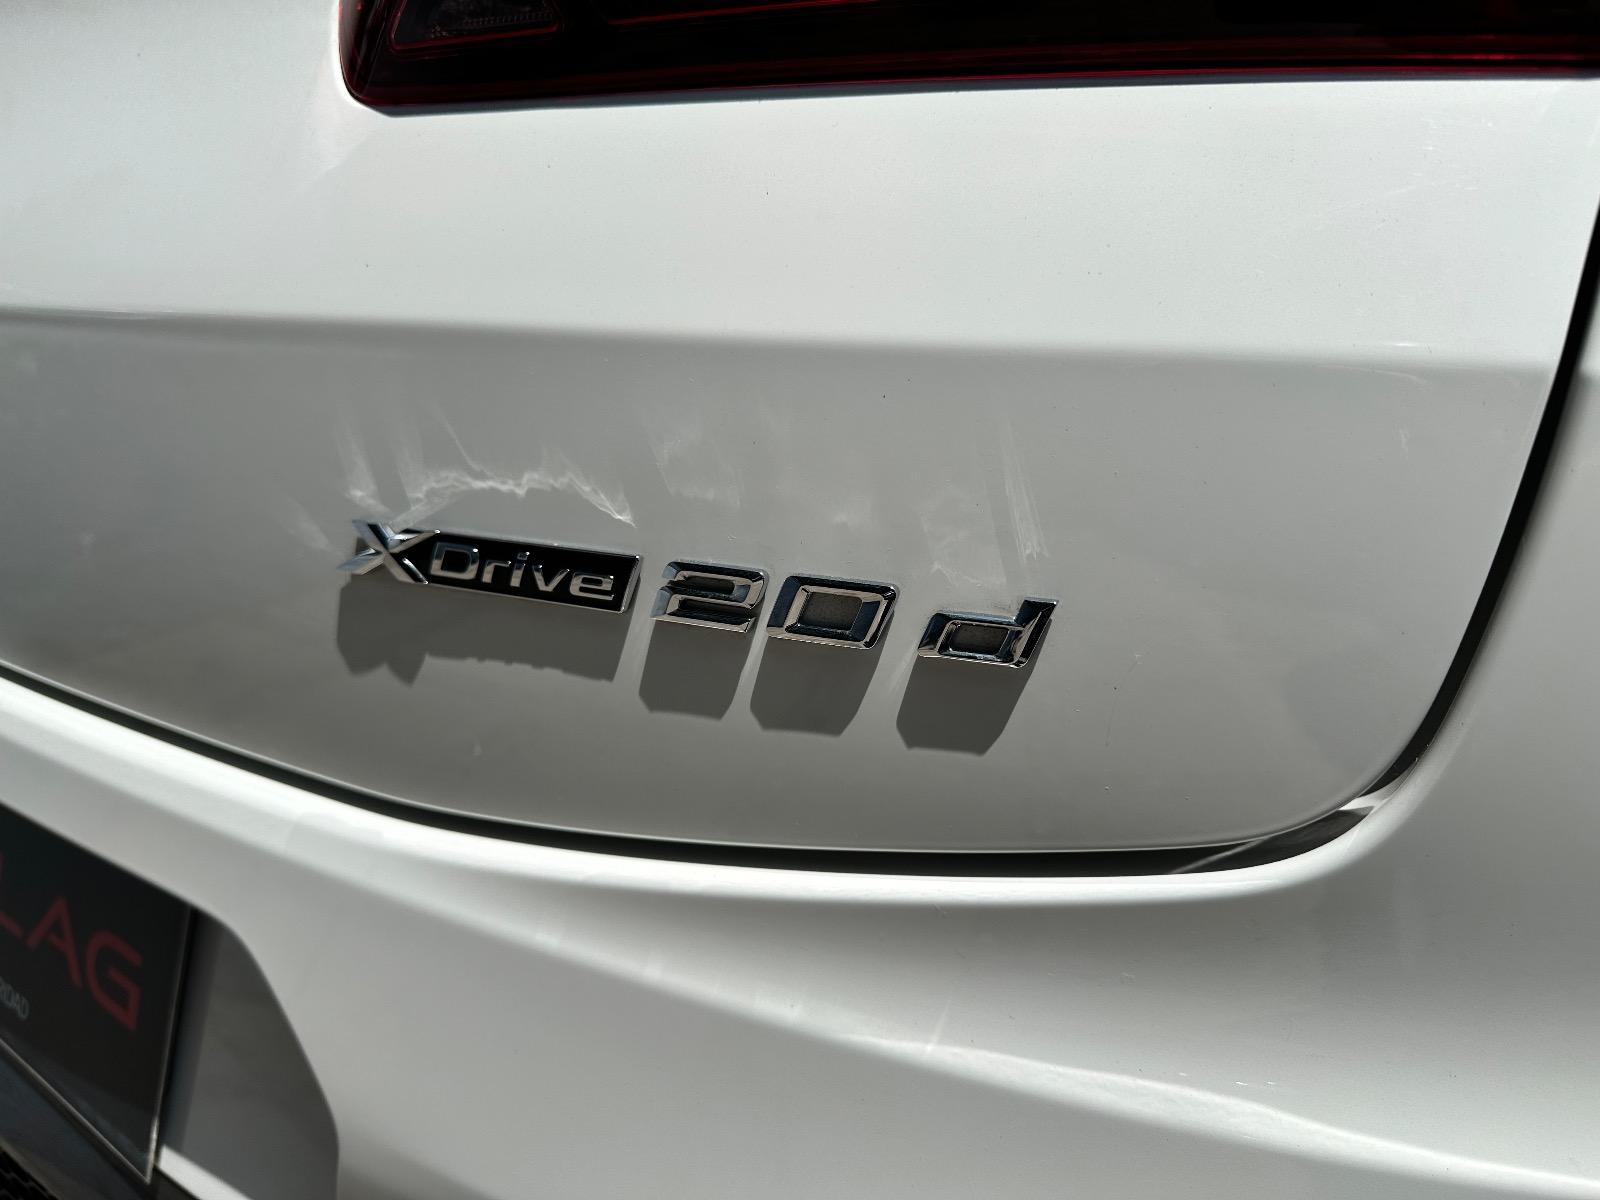 BMW X4 XDRIVE 20D 2.0 DIESEL  2020 ABSOLUTAMENTE COMO NUEVO  - CSILLAG